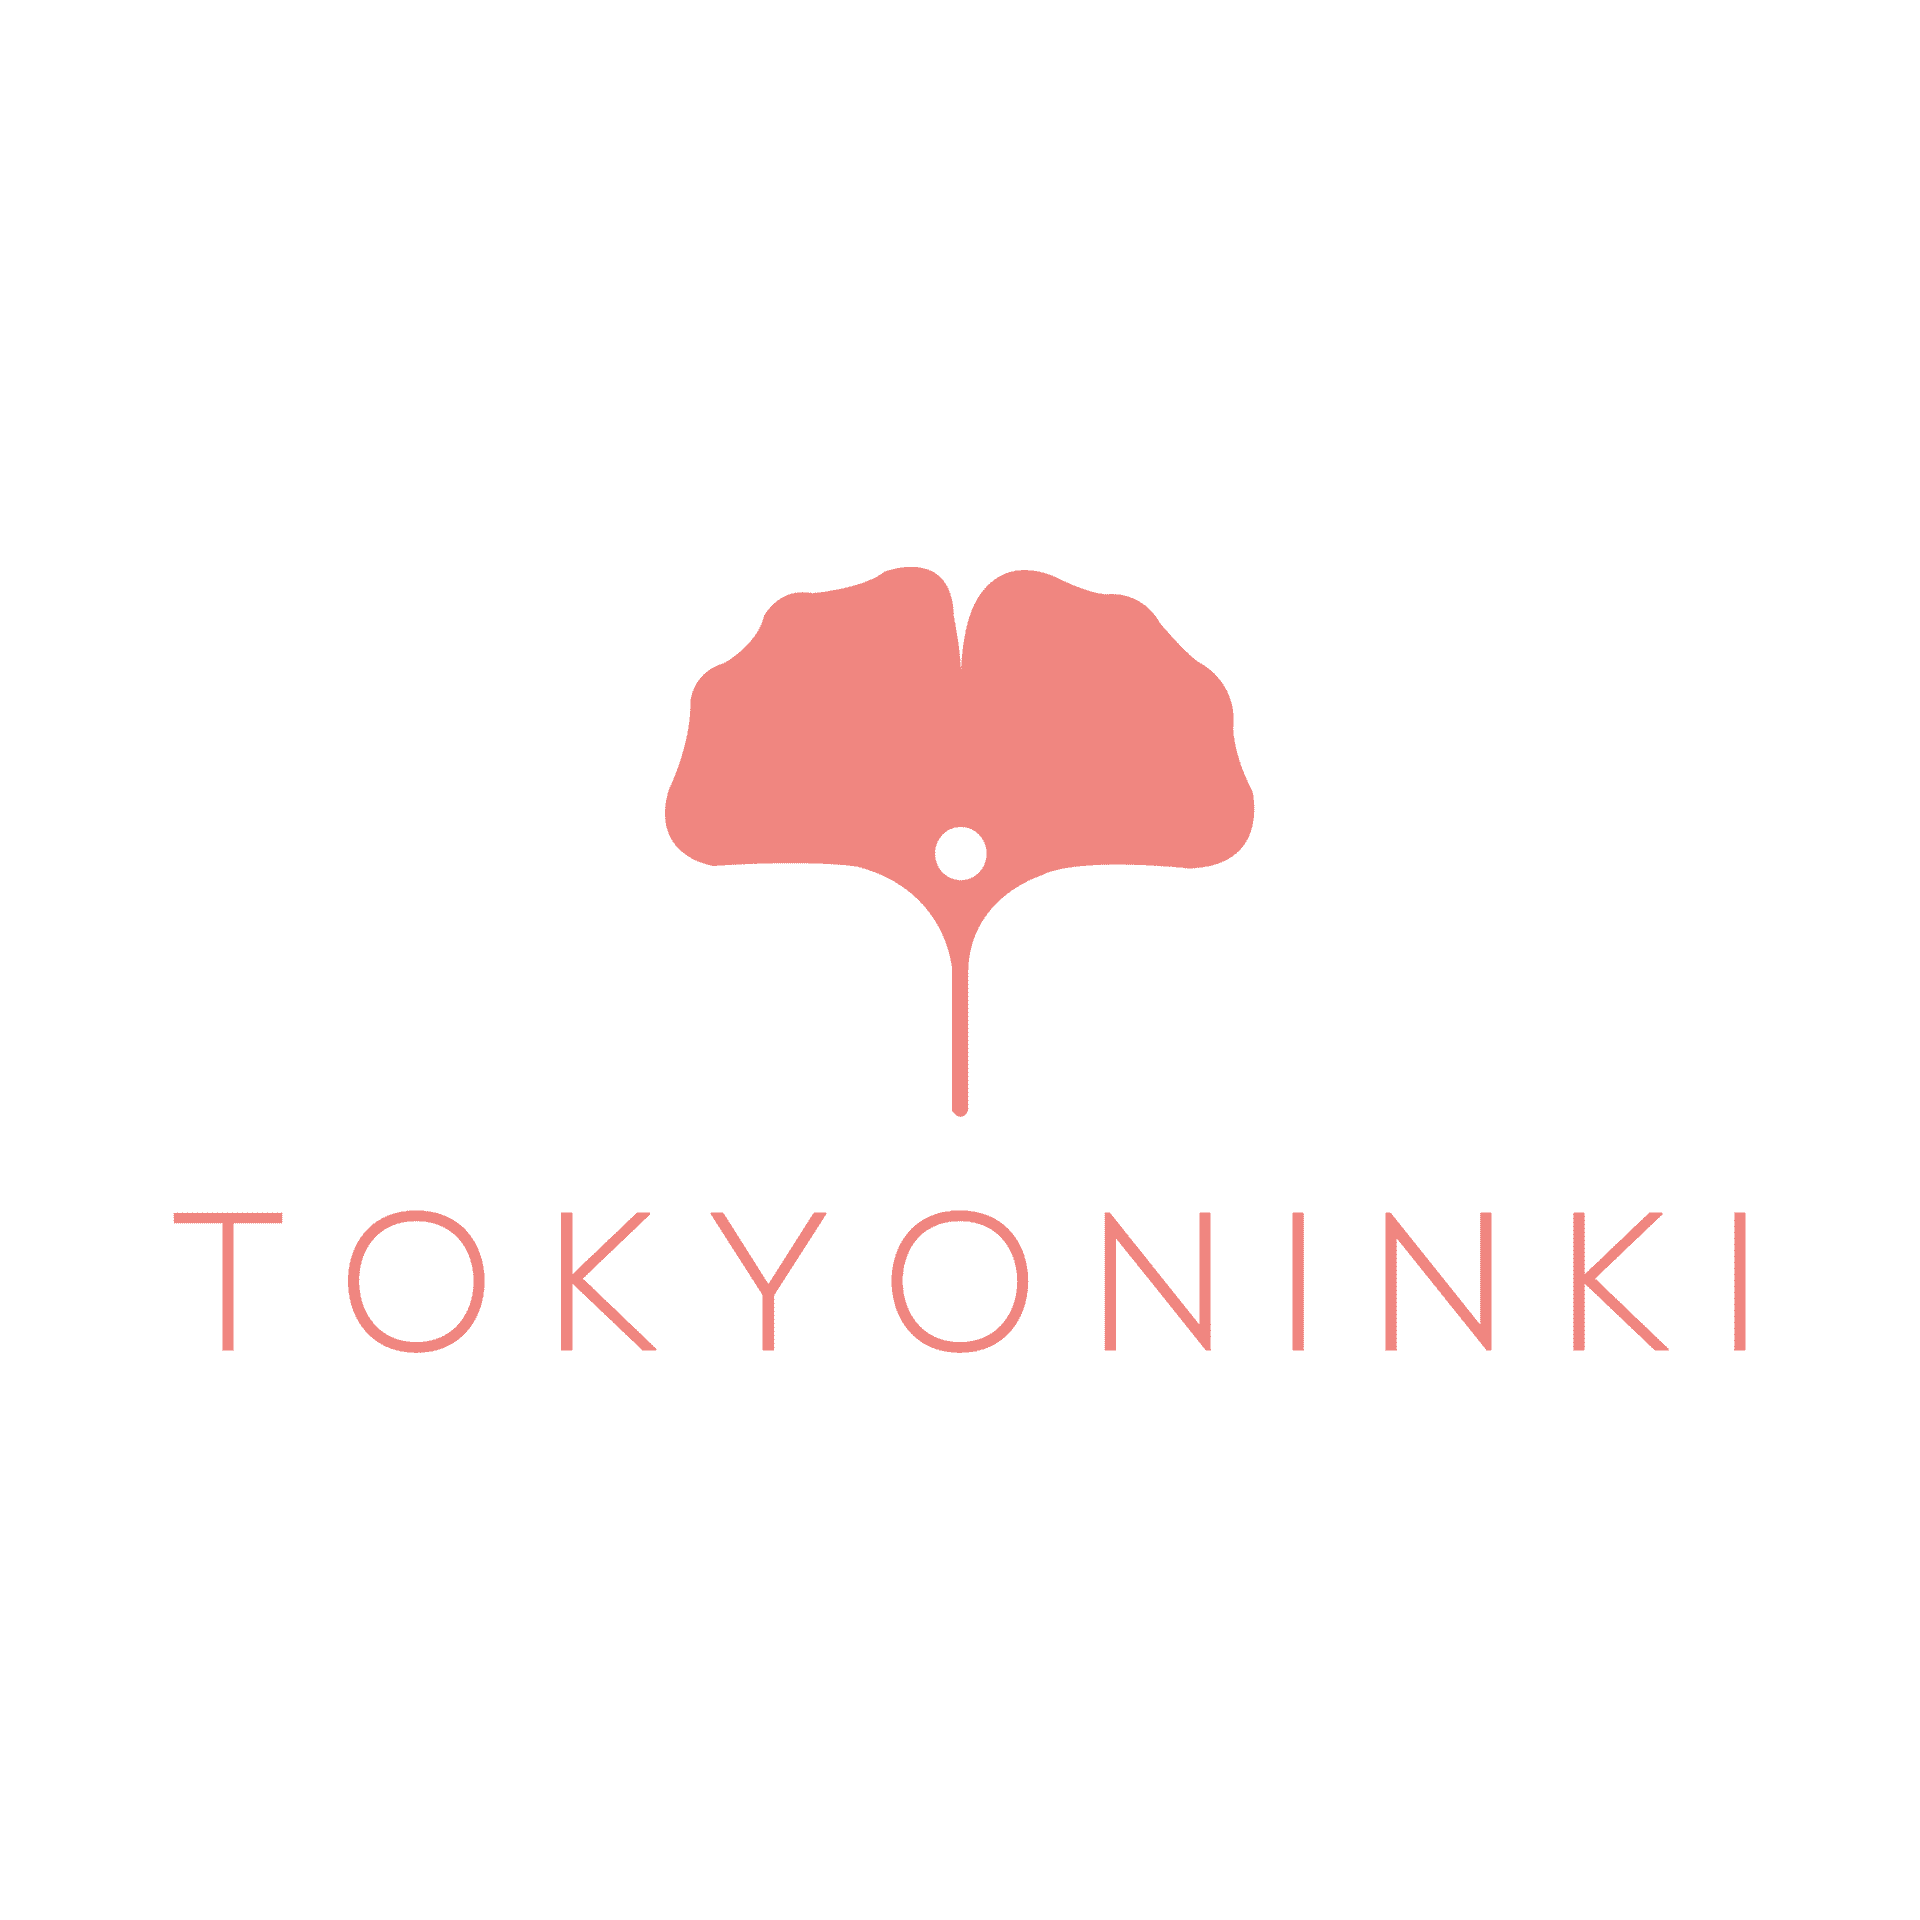 Tokyoninki